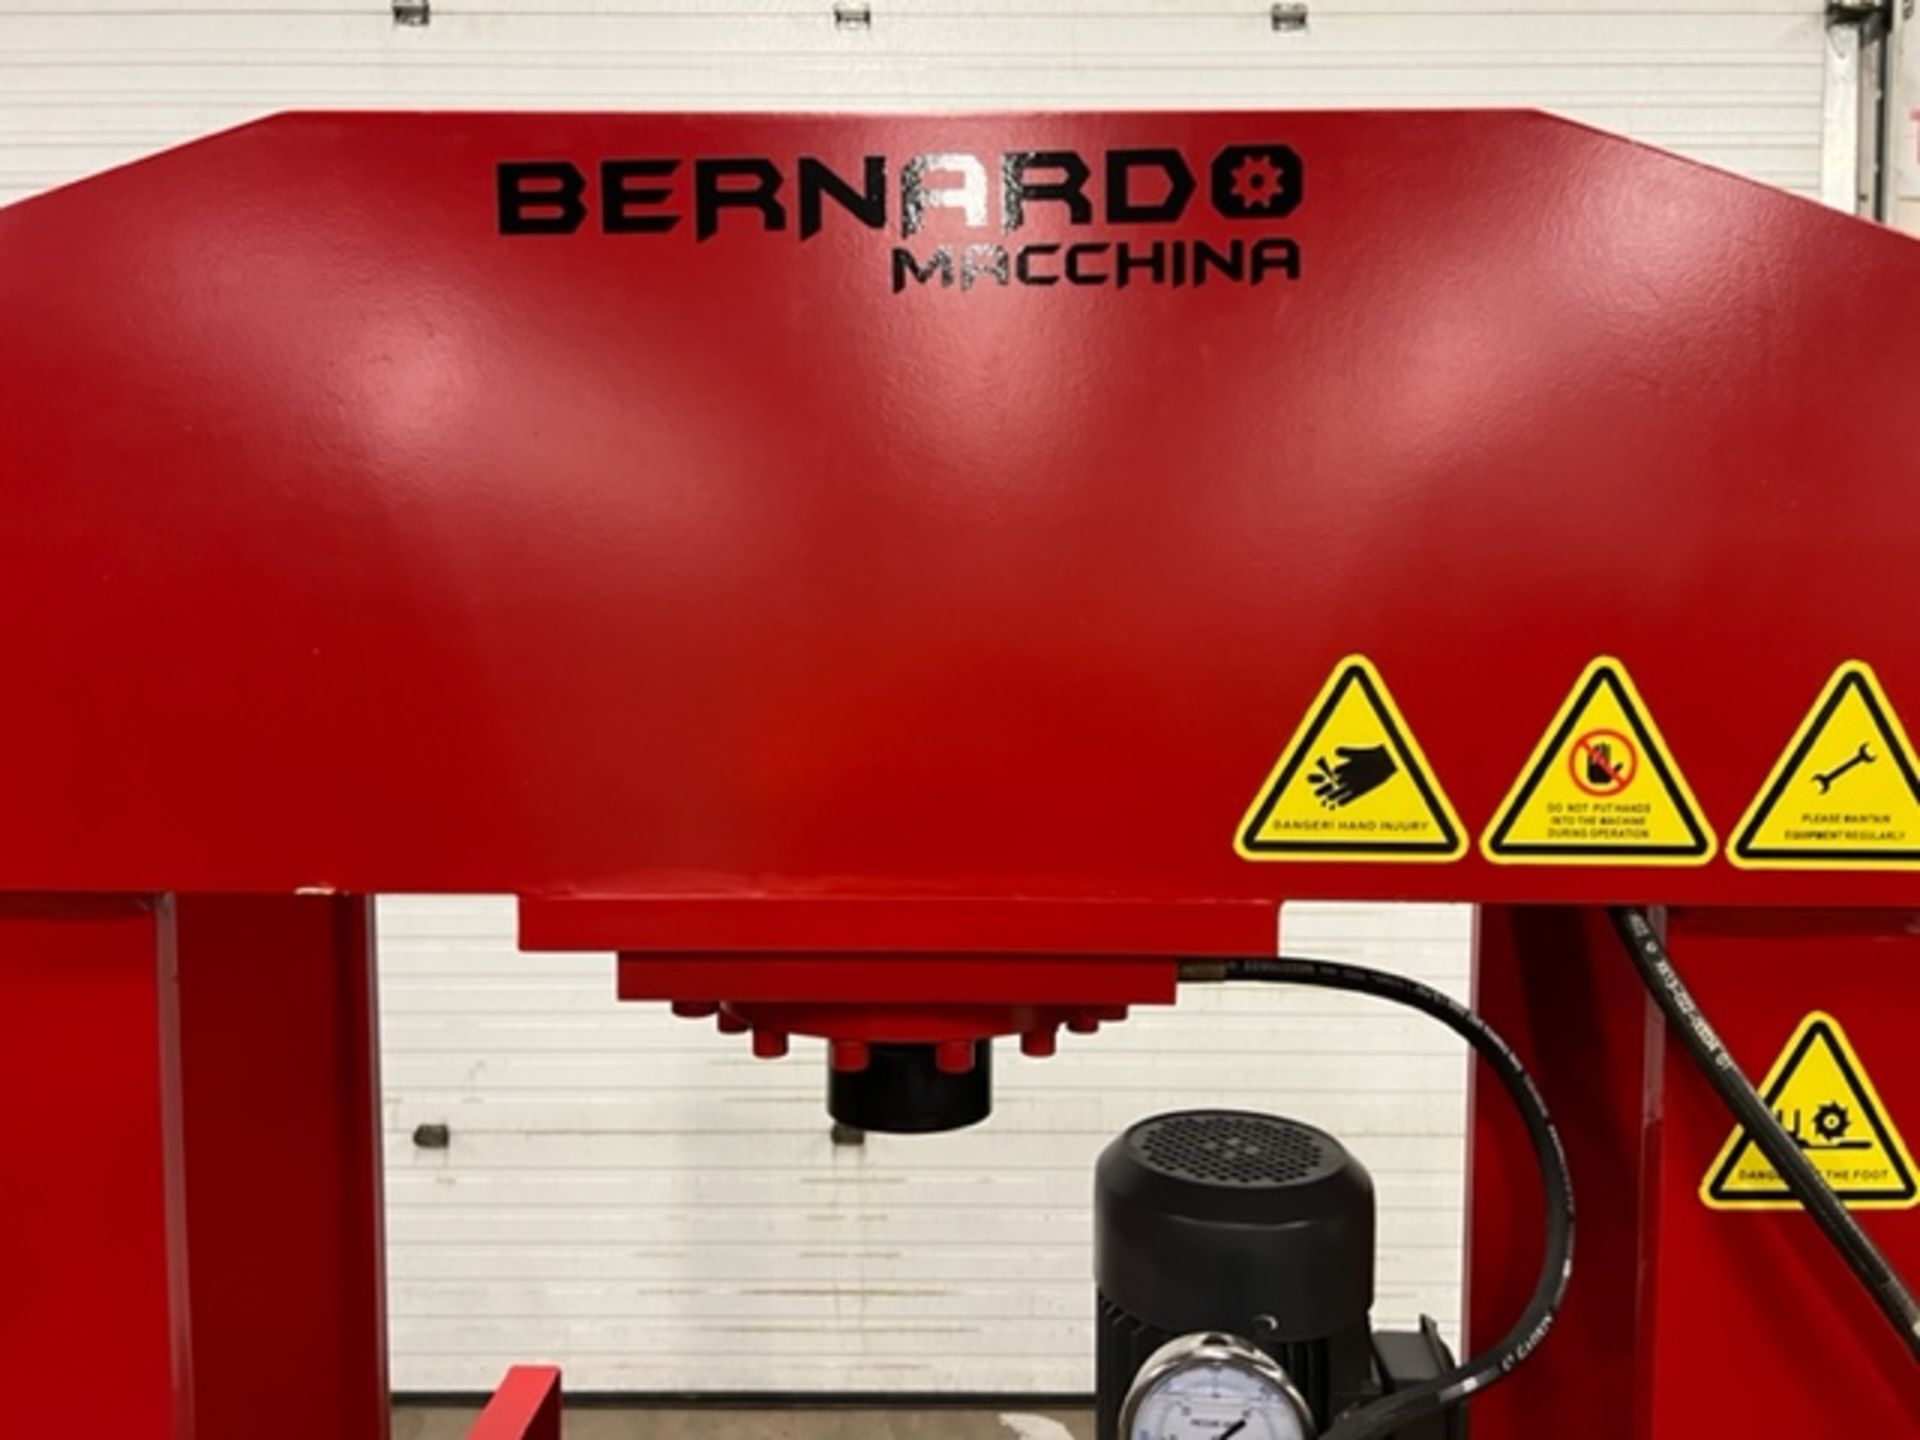 Bernardo Macchina model BHP-80 H-Frame Press 80 Ton Capacity with adjustable table height, hydraulic - Image 2 of 5